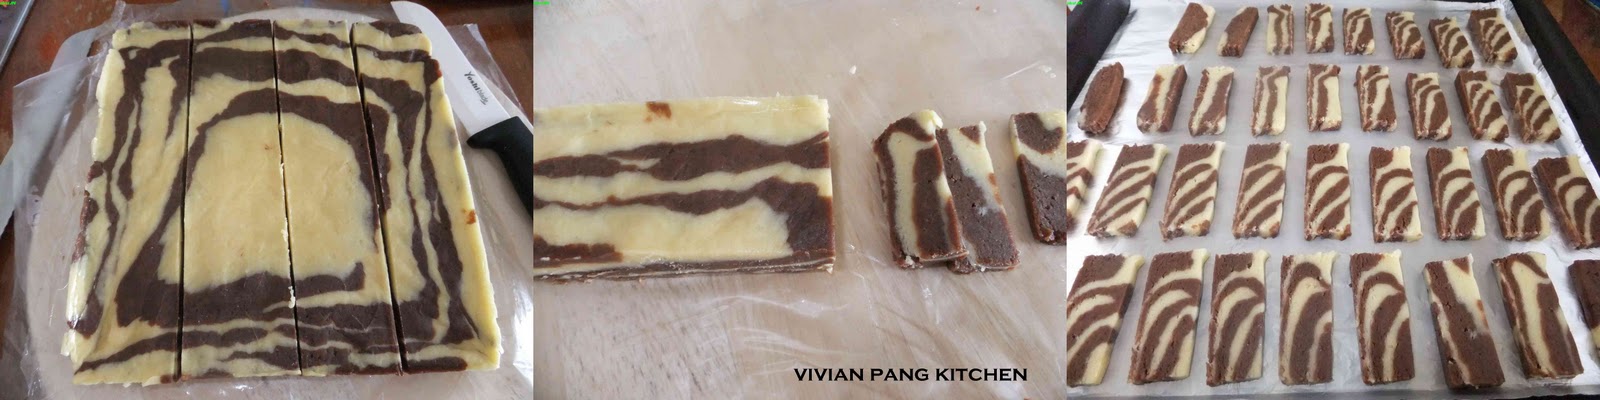 Vivian Pang Kitchen: Zebra Cookies